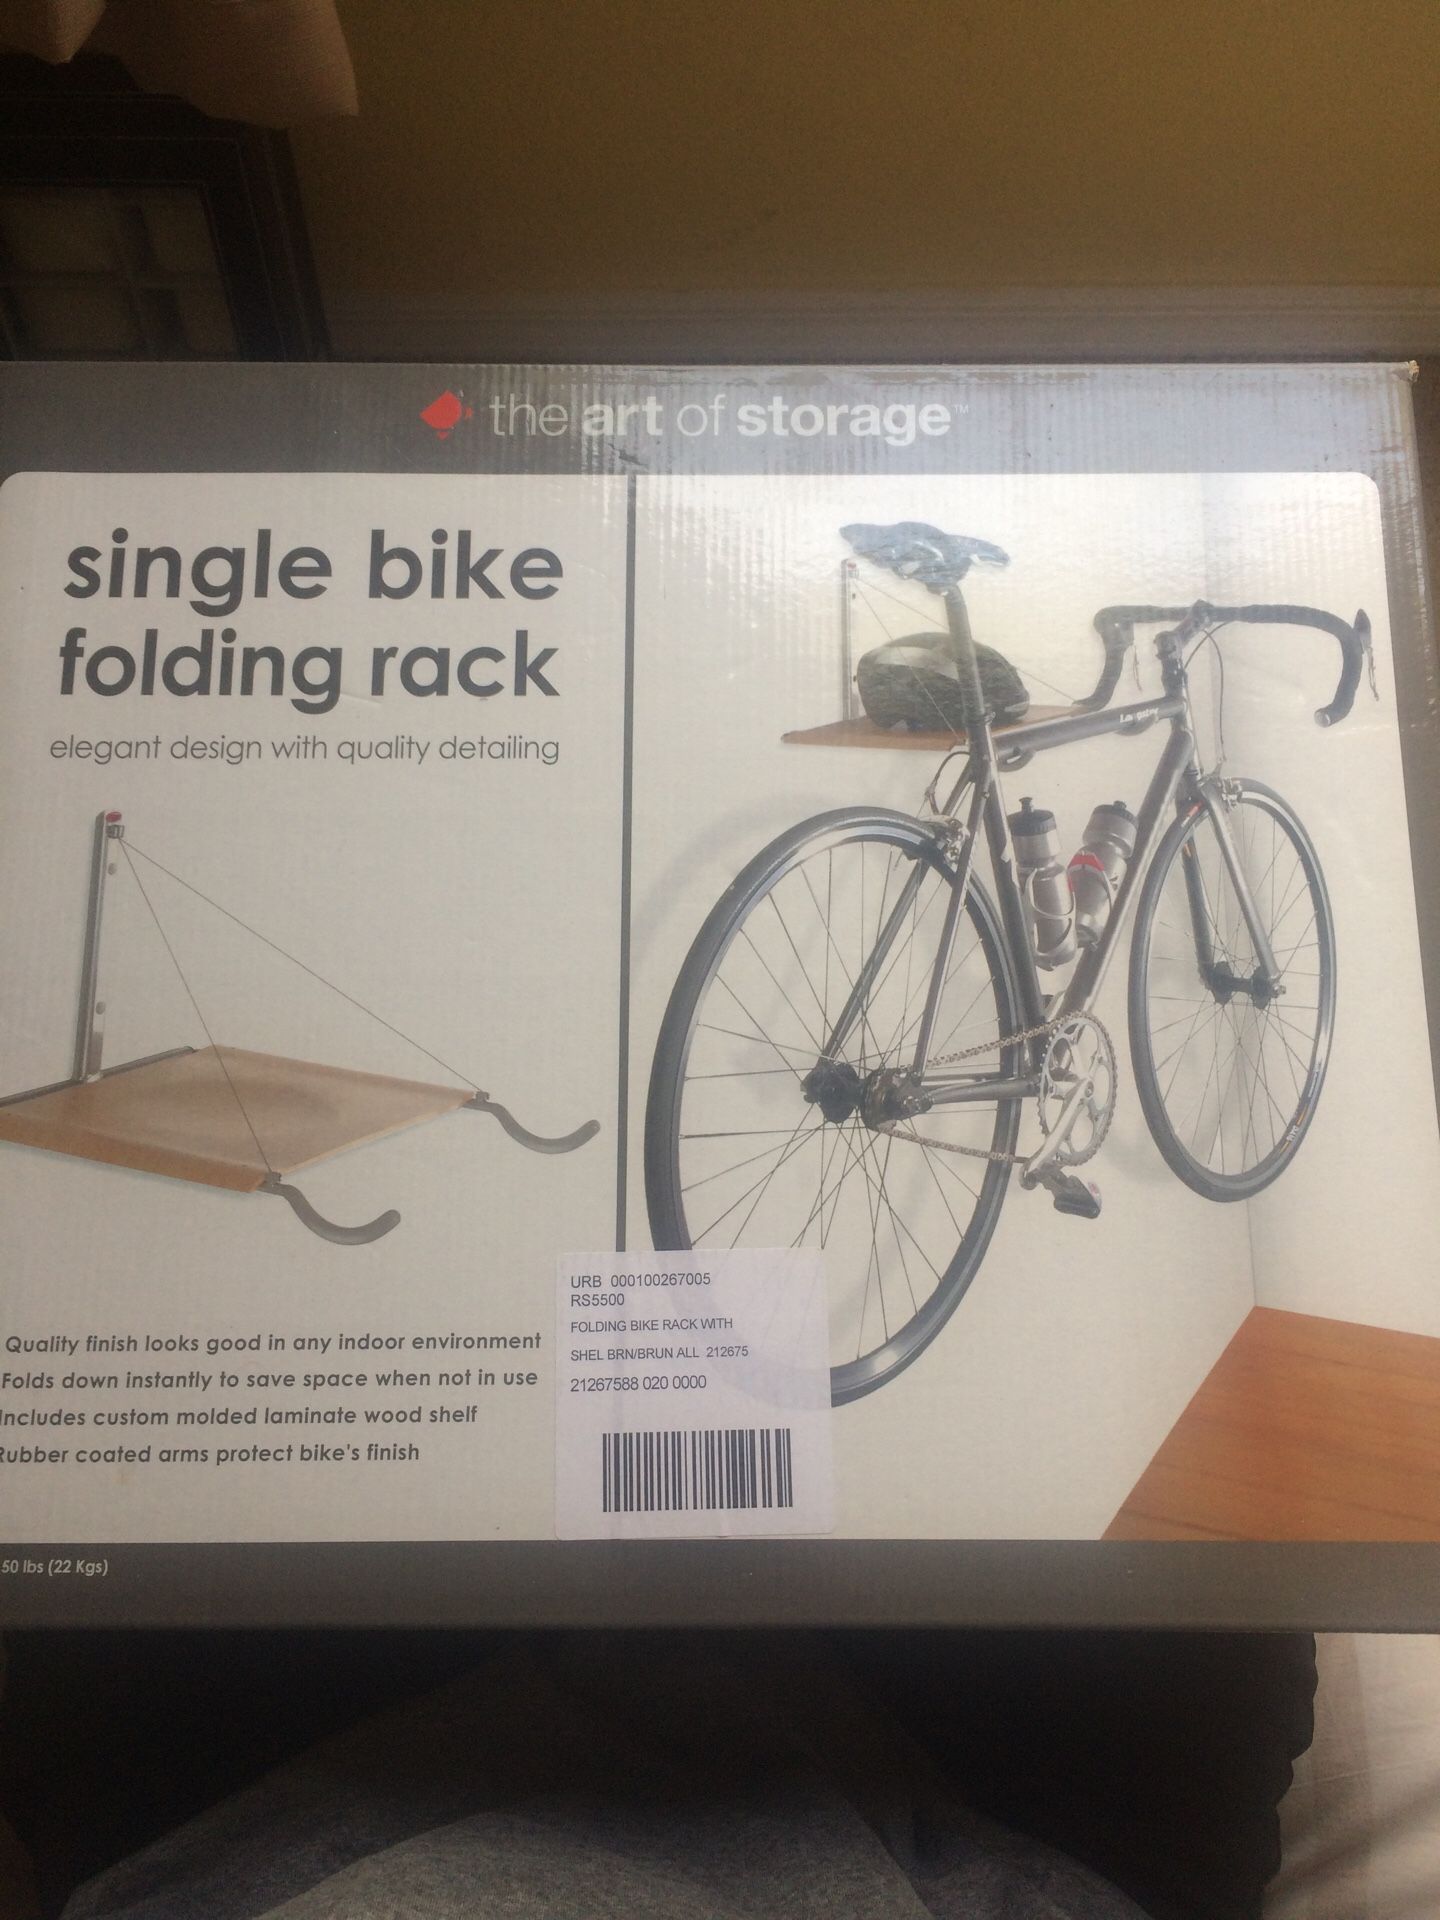 Single bike folding rack